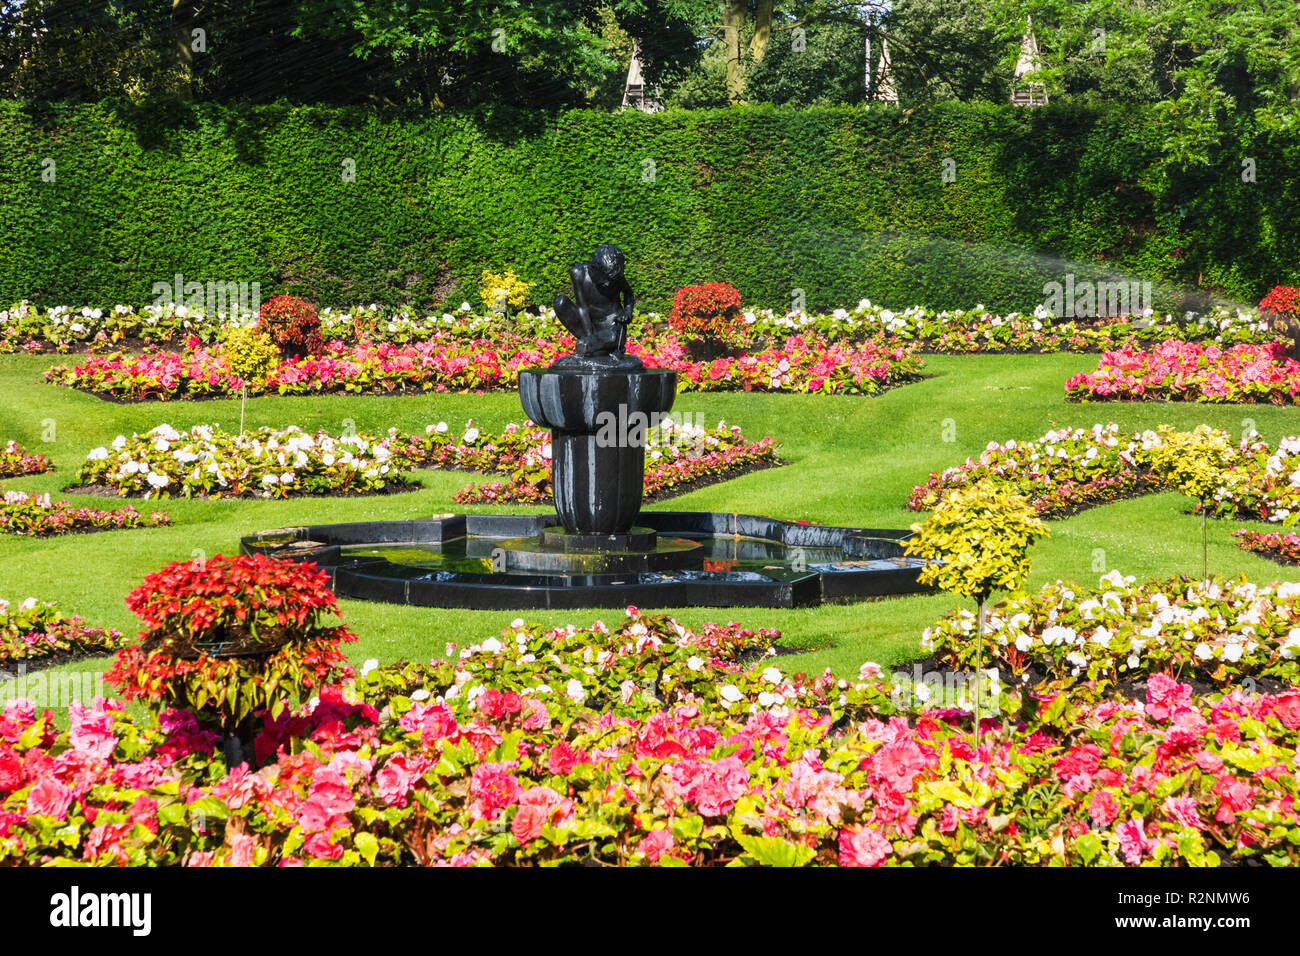 England, London, Regents Park, Queen Mary's Gardens Stock Photo